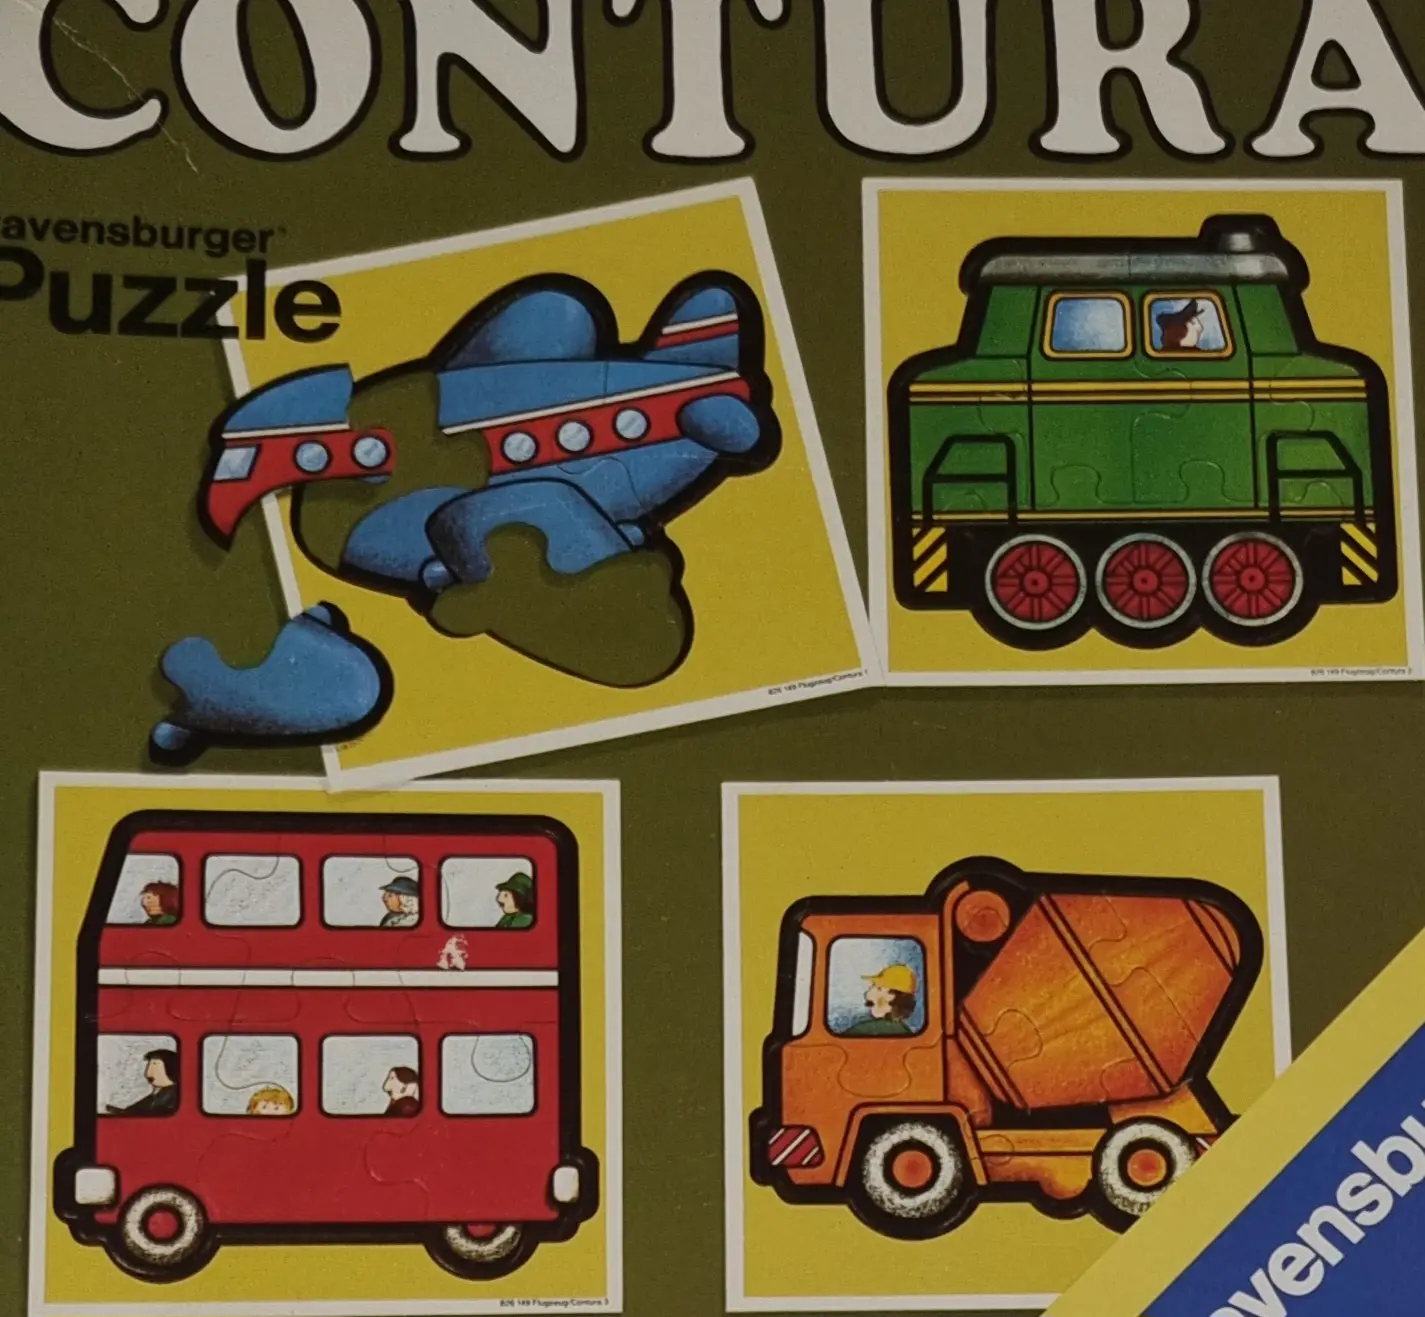 Ravensburger Puzzle Contura 4-6 Teile 62356235 Flugzeug